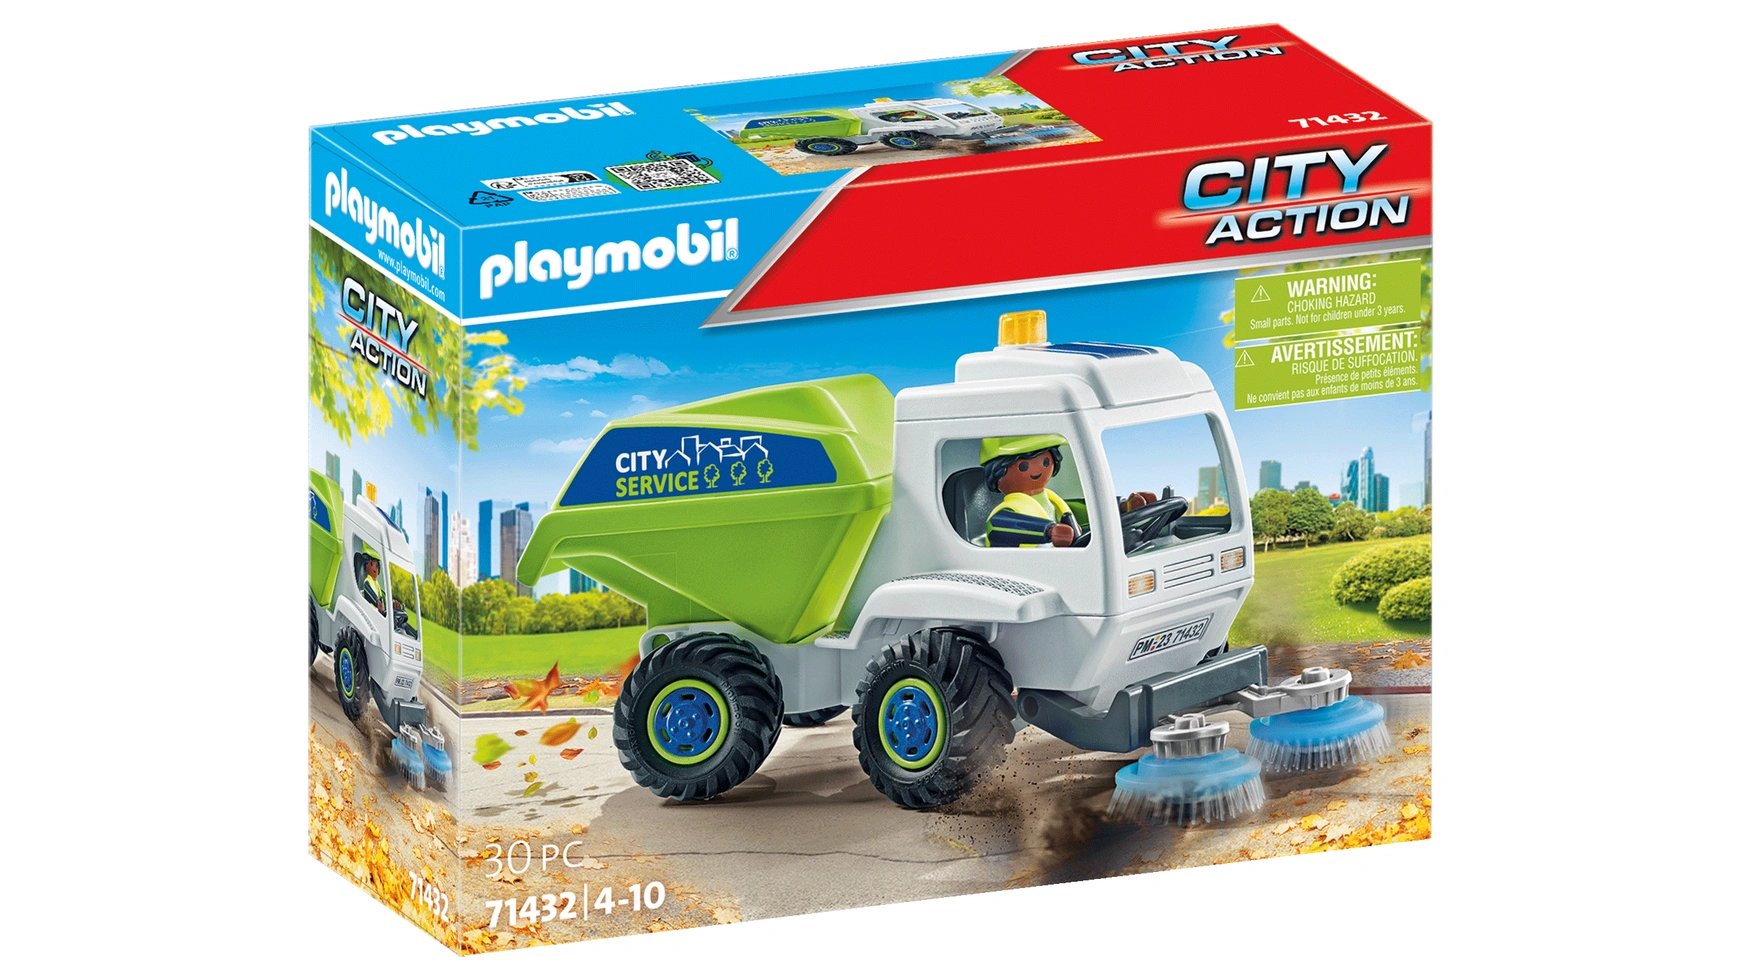 City action подметальная машина Playmobil цена и фото